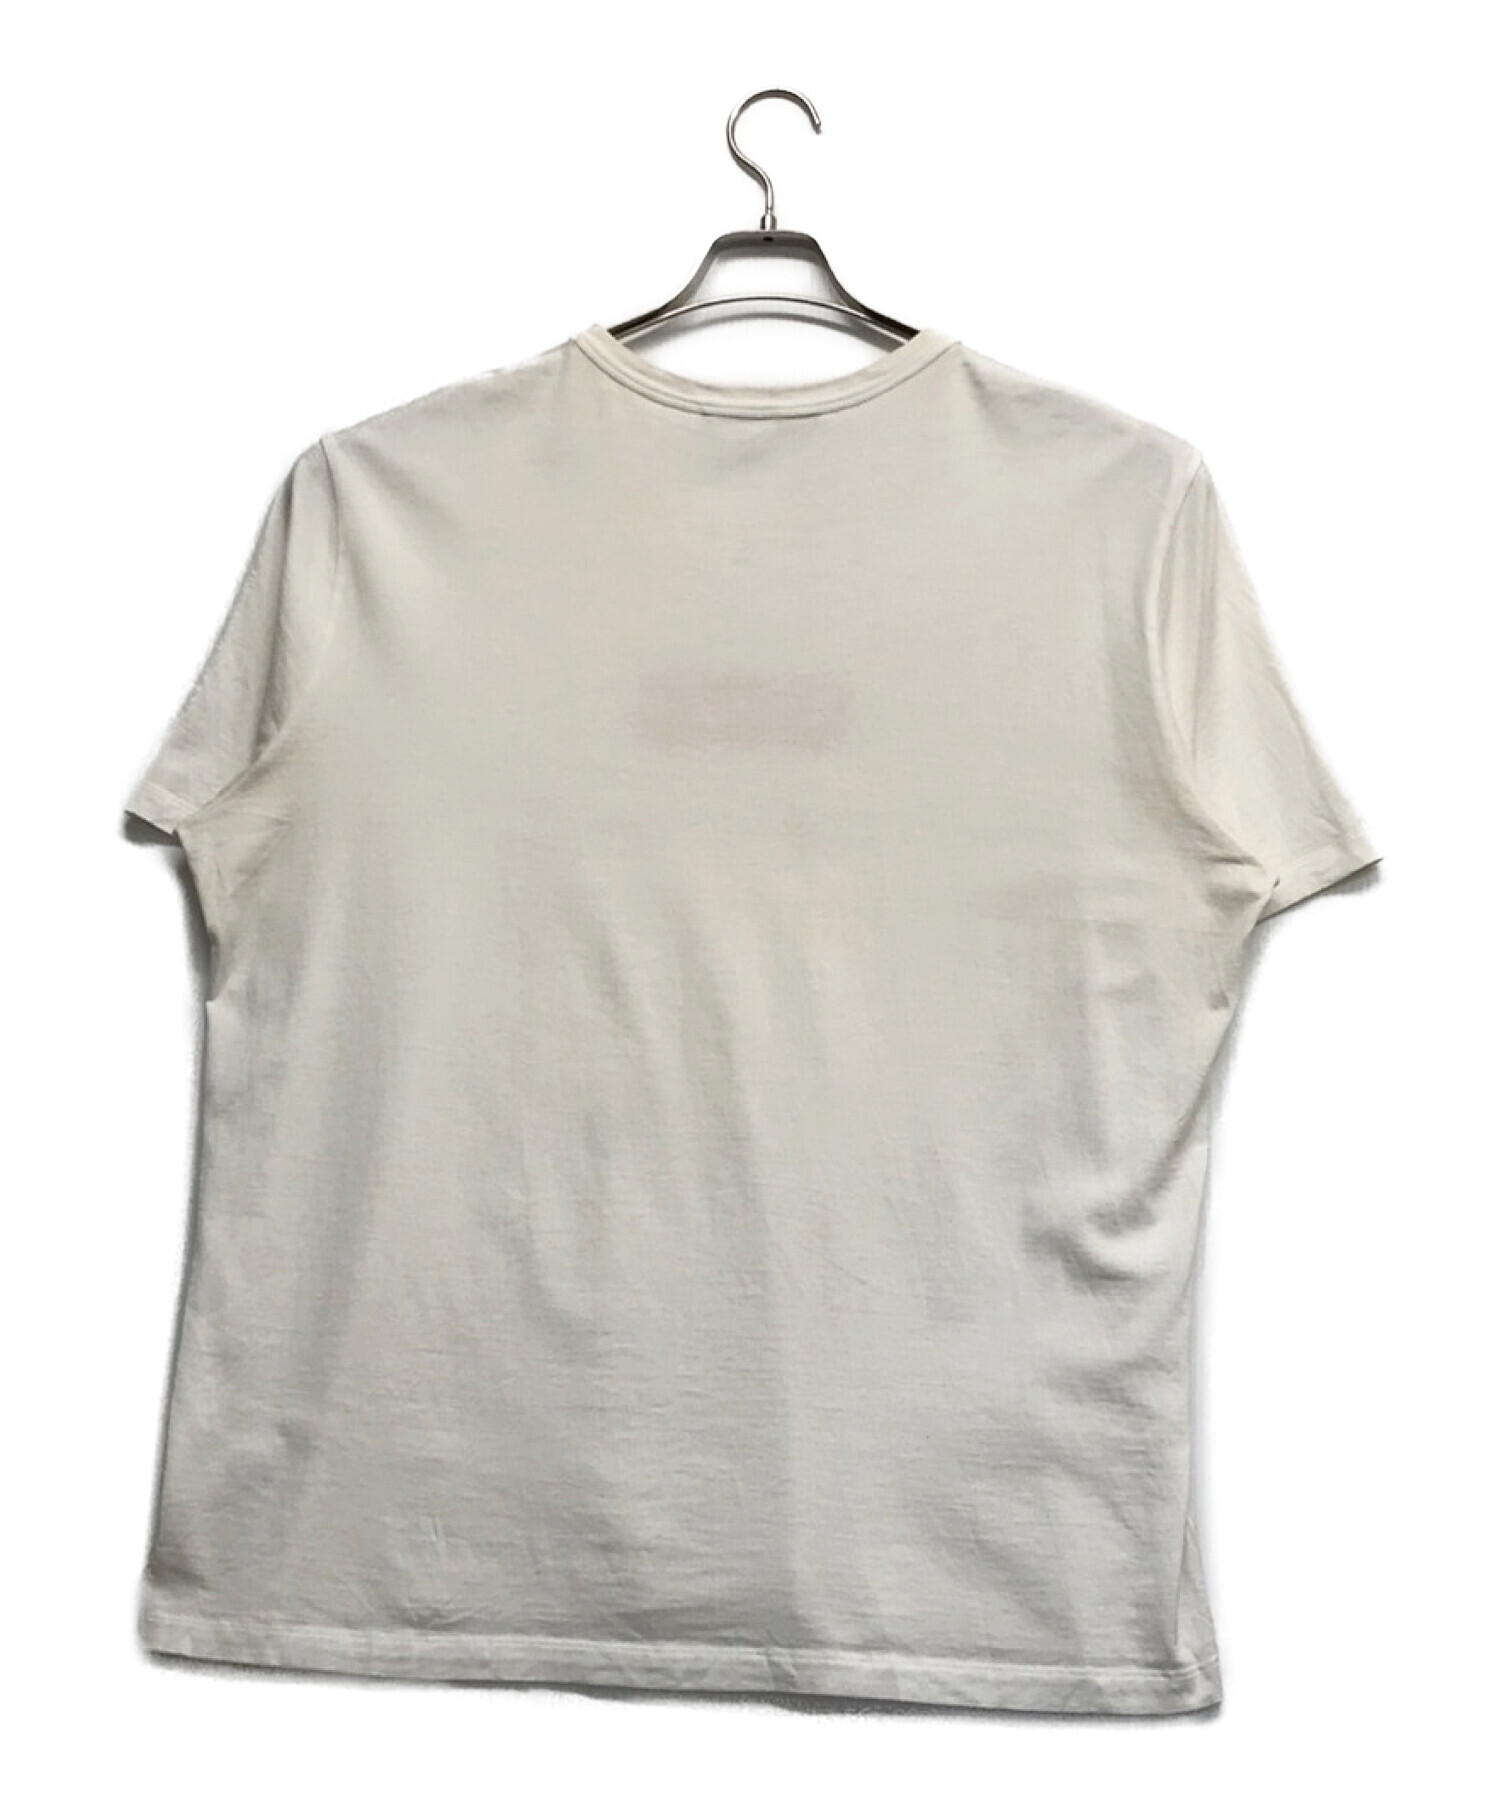 LOUIS VUITTON (ルイ ヴィトン) Supreme (シュプリーム) モノグラムボックスロゴ半袖Tシャツ ホワイト サイズ:XXL